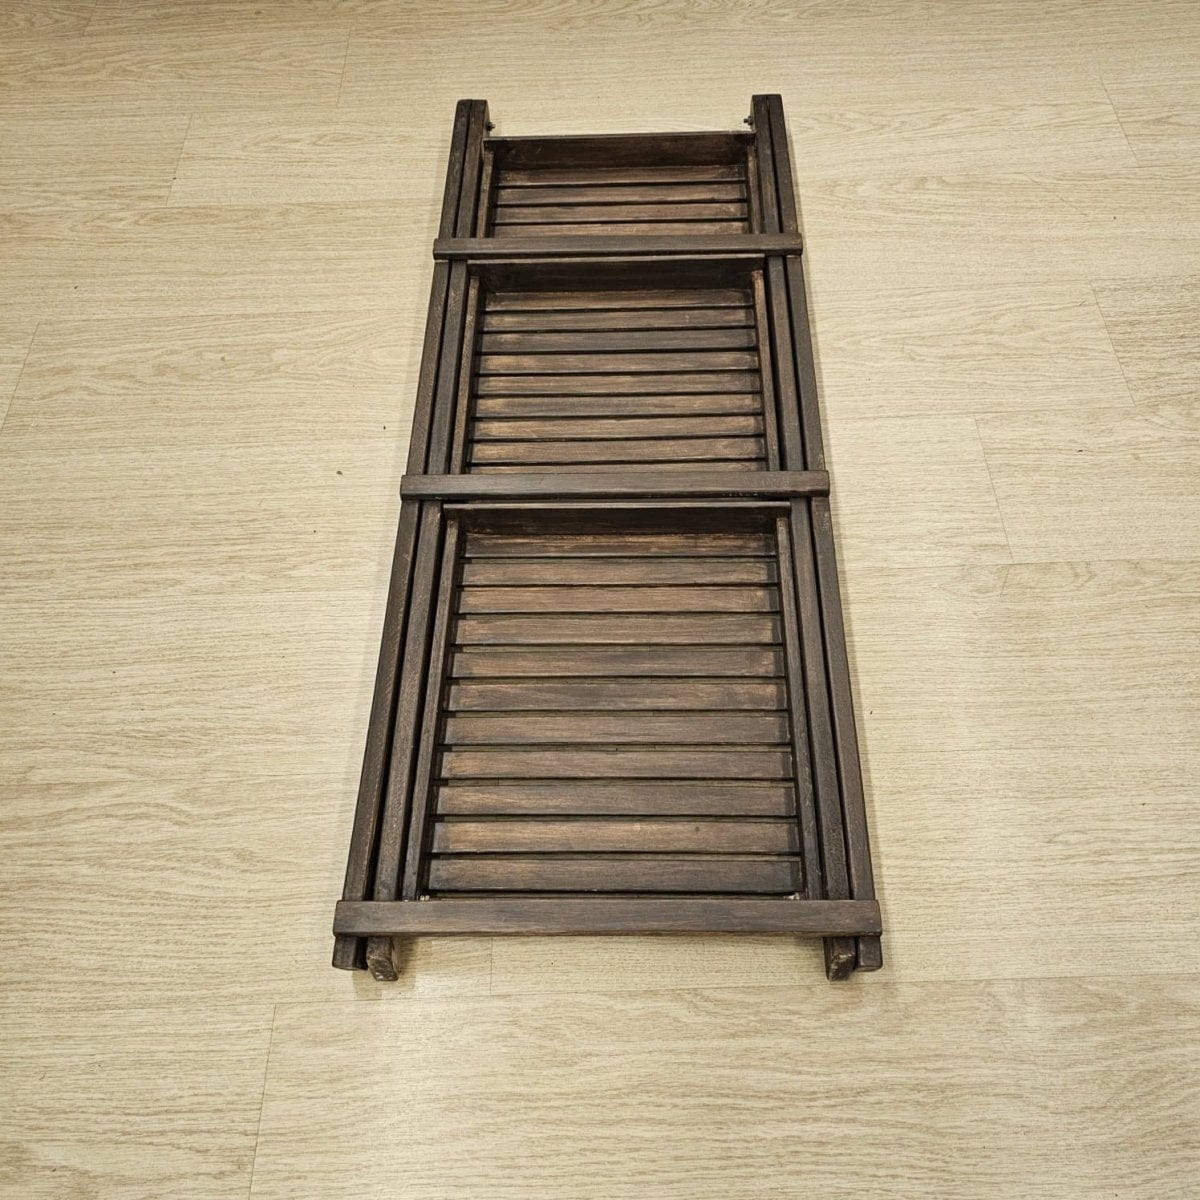 Barish Multi-purpose Floor Standing Stands (Set of 3) Walnut BH0150 Best Home Decor Handcrafted